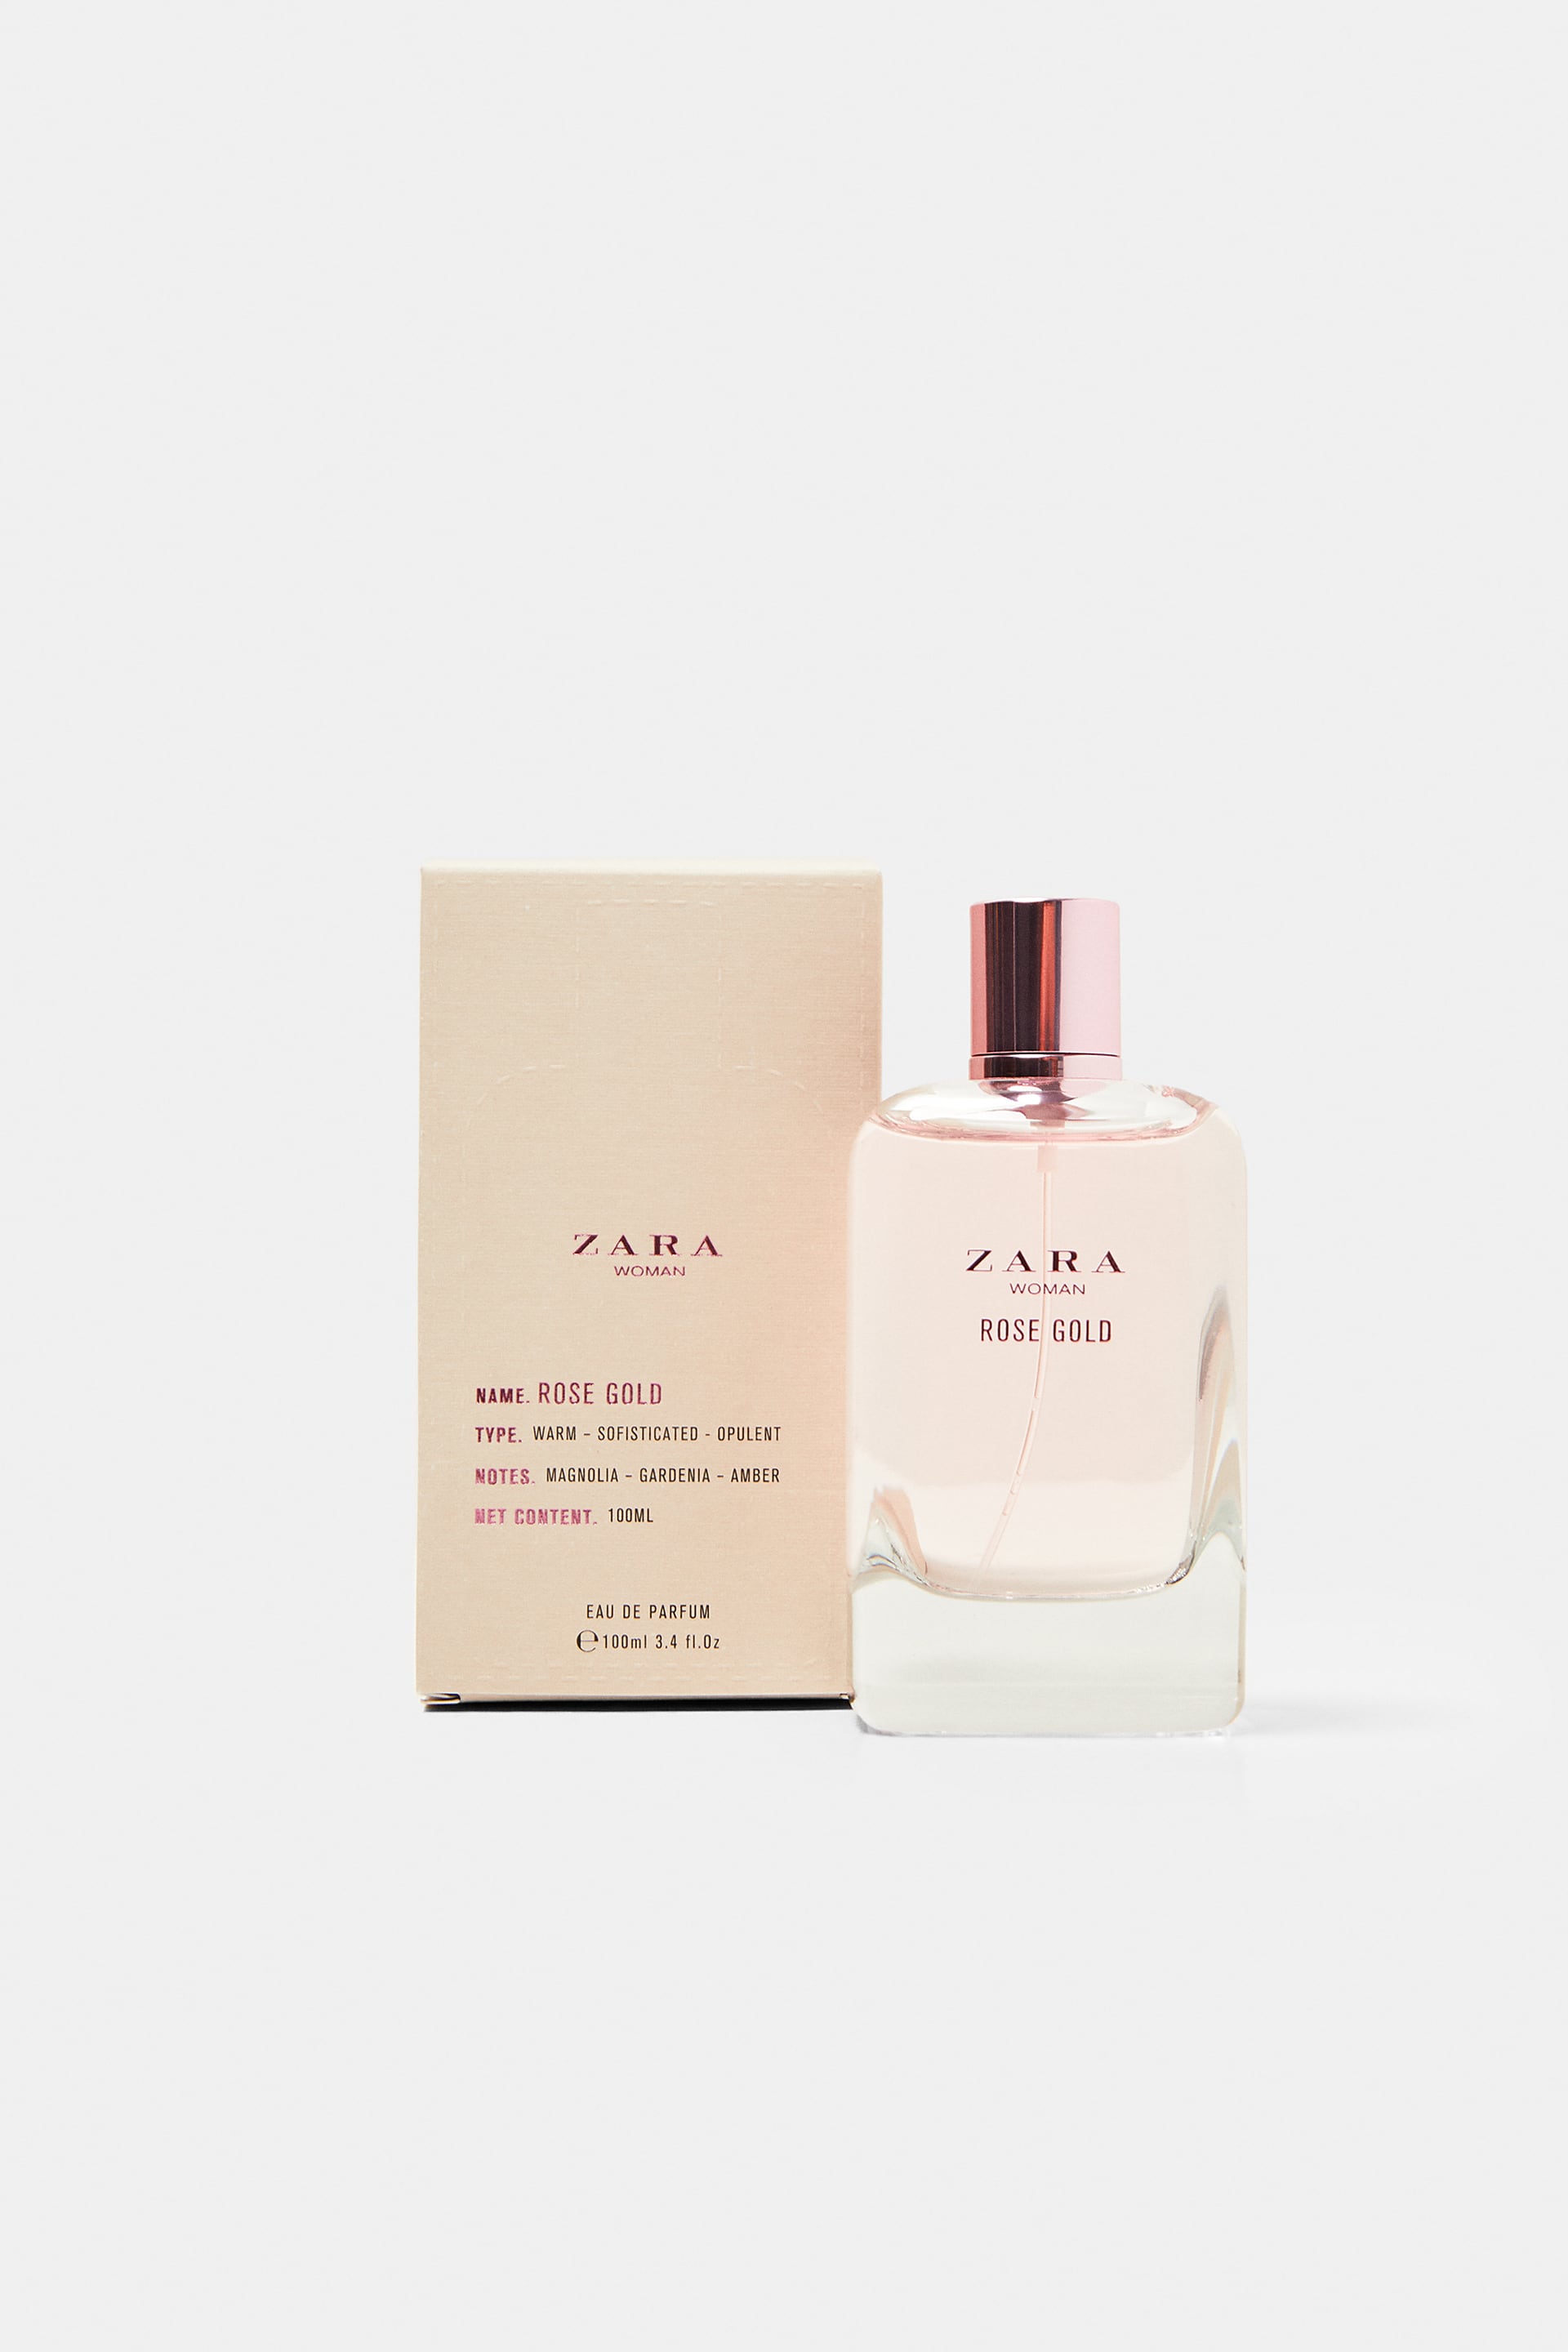 Zara Woman Rose Gold Eau de Parfum